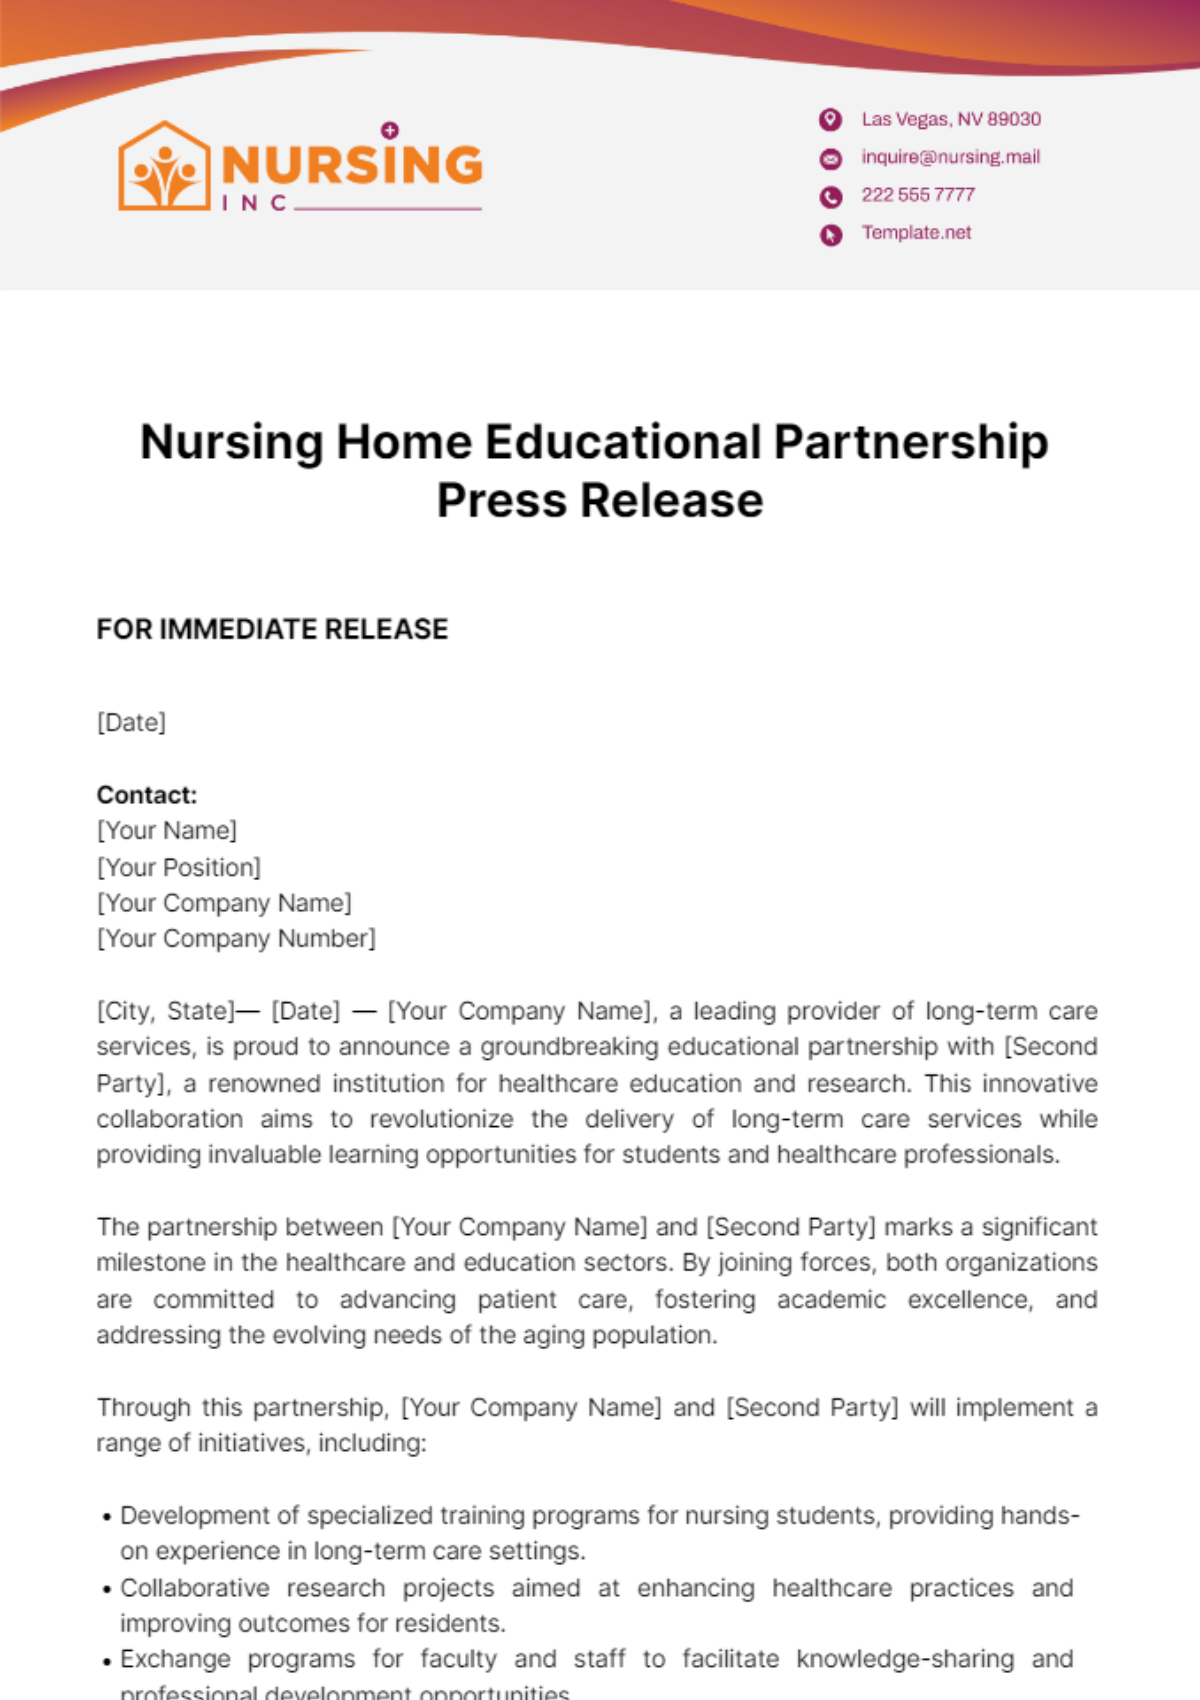 Nursing Home Educational Partnership Press Release Template